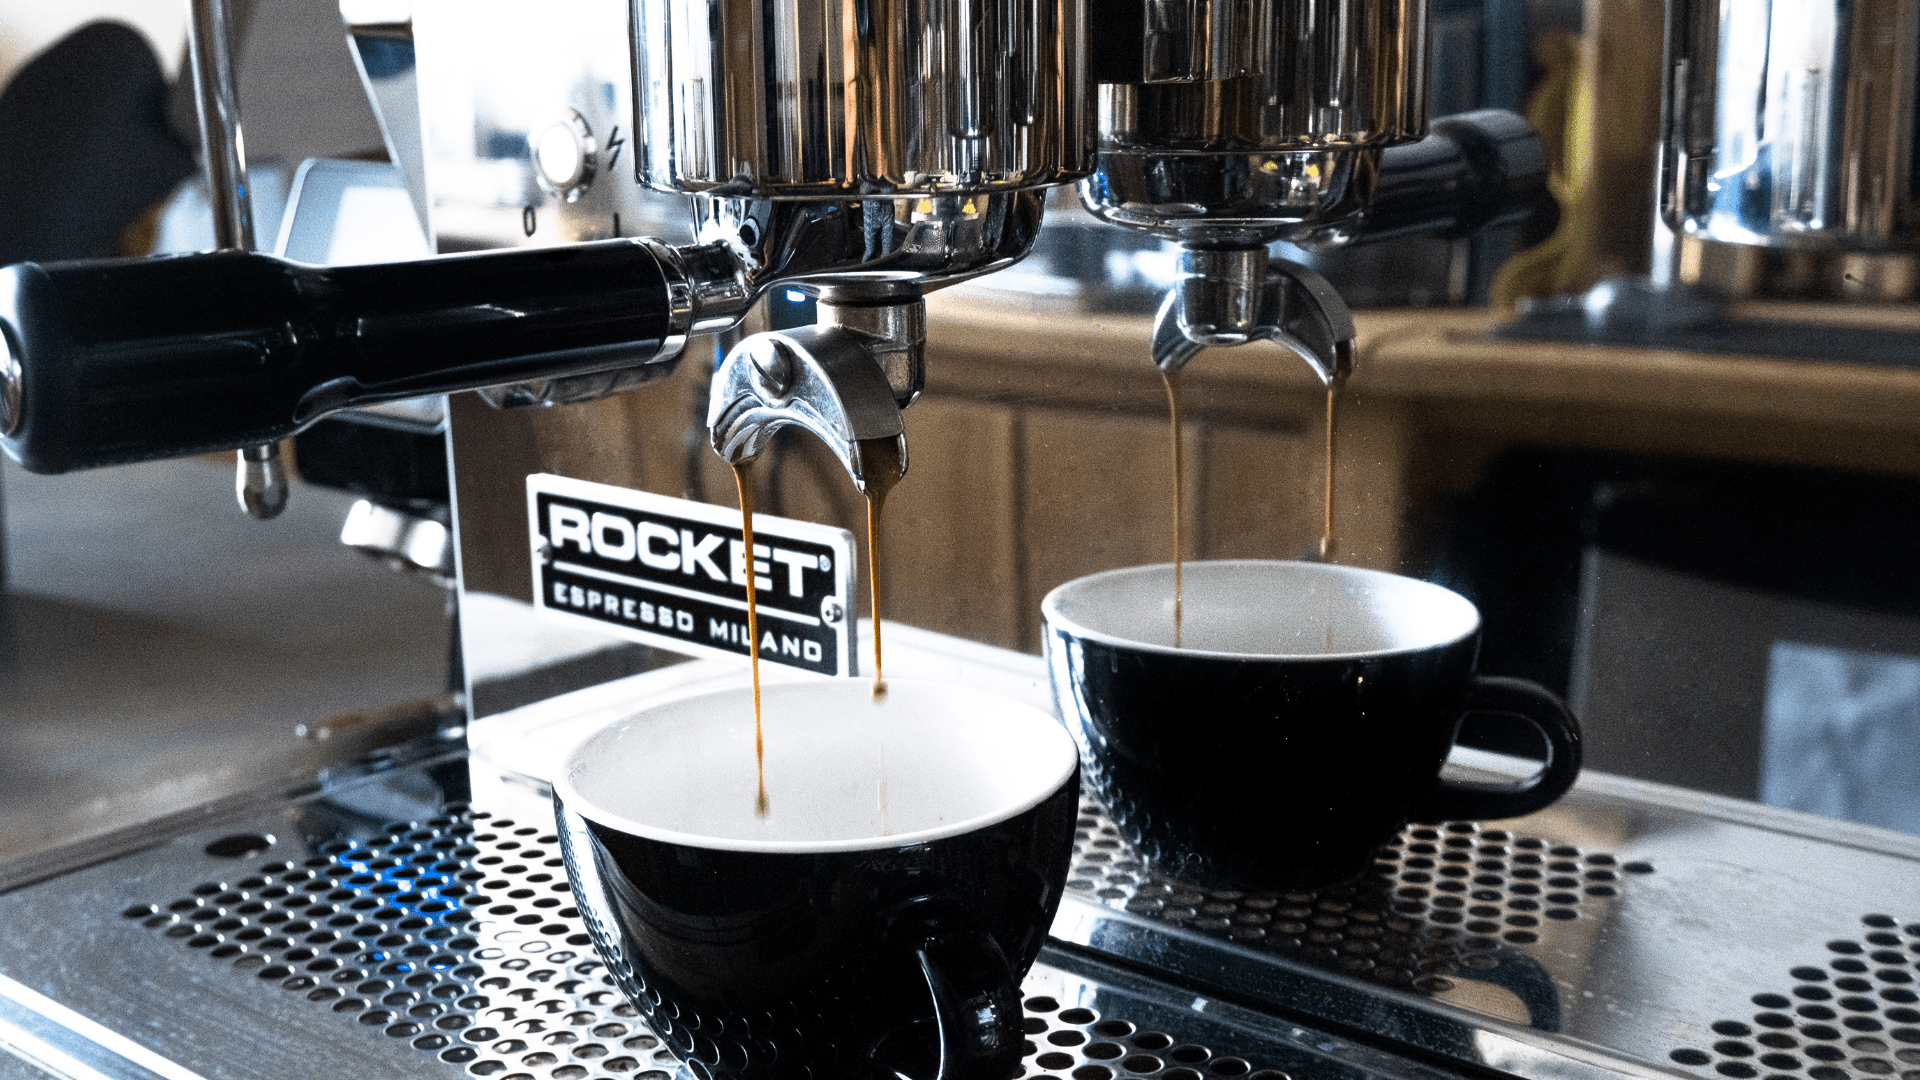 Comment nettoyer votre machine espresso? - Café Barista